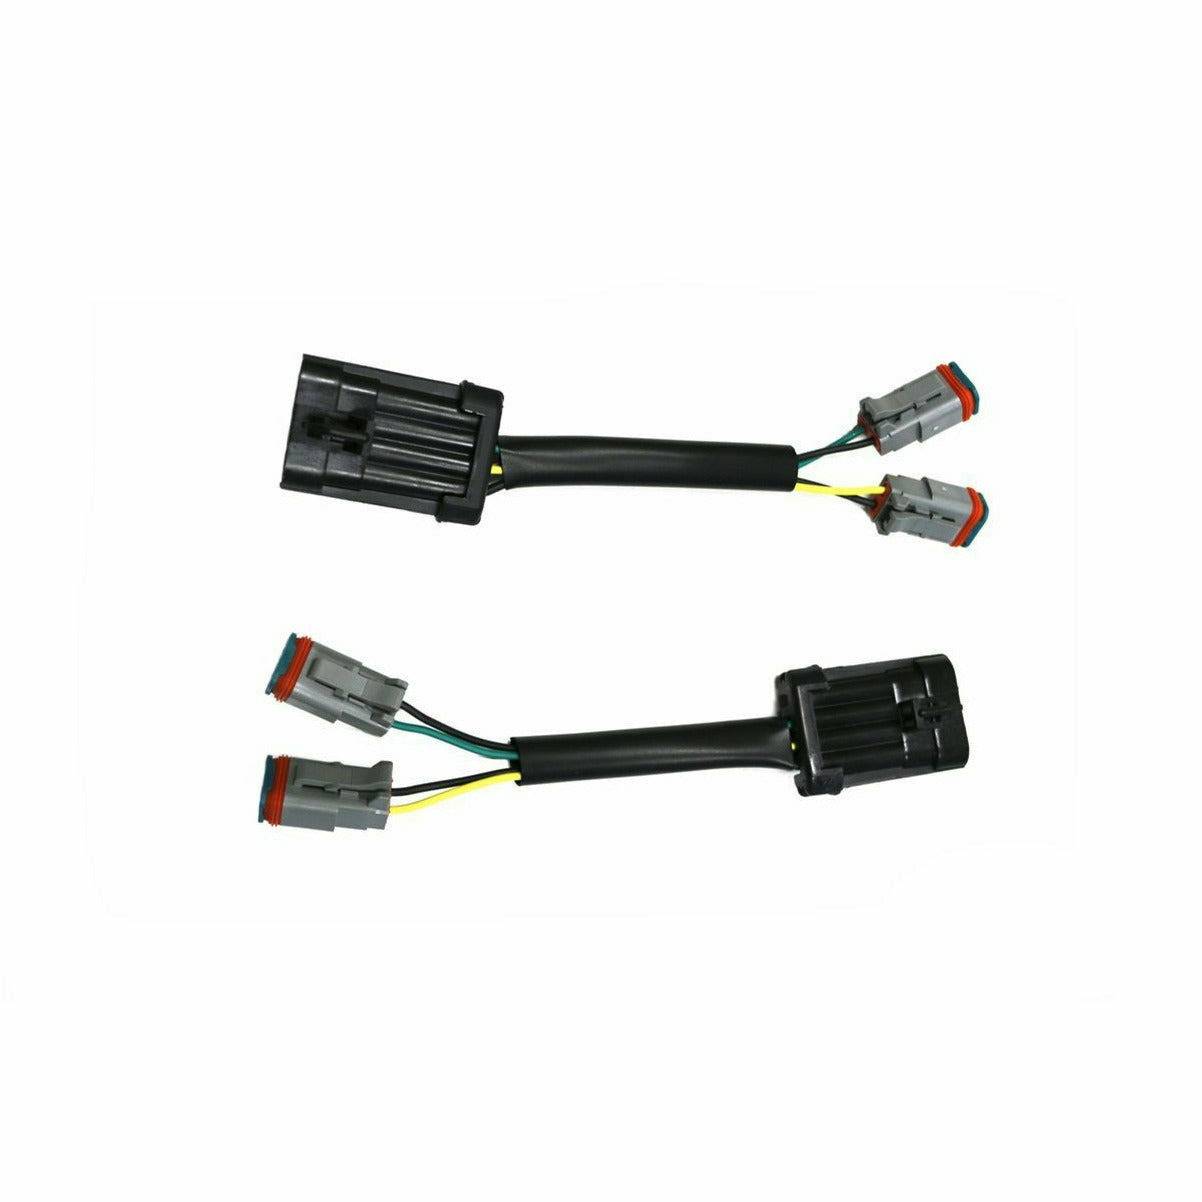 XTC Polaris RZR Plug & Play Headlight Adapter Harness to 2 Deutsch DT06-2S Connectors